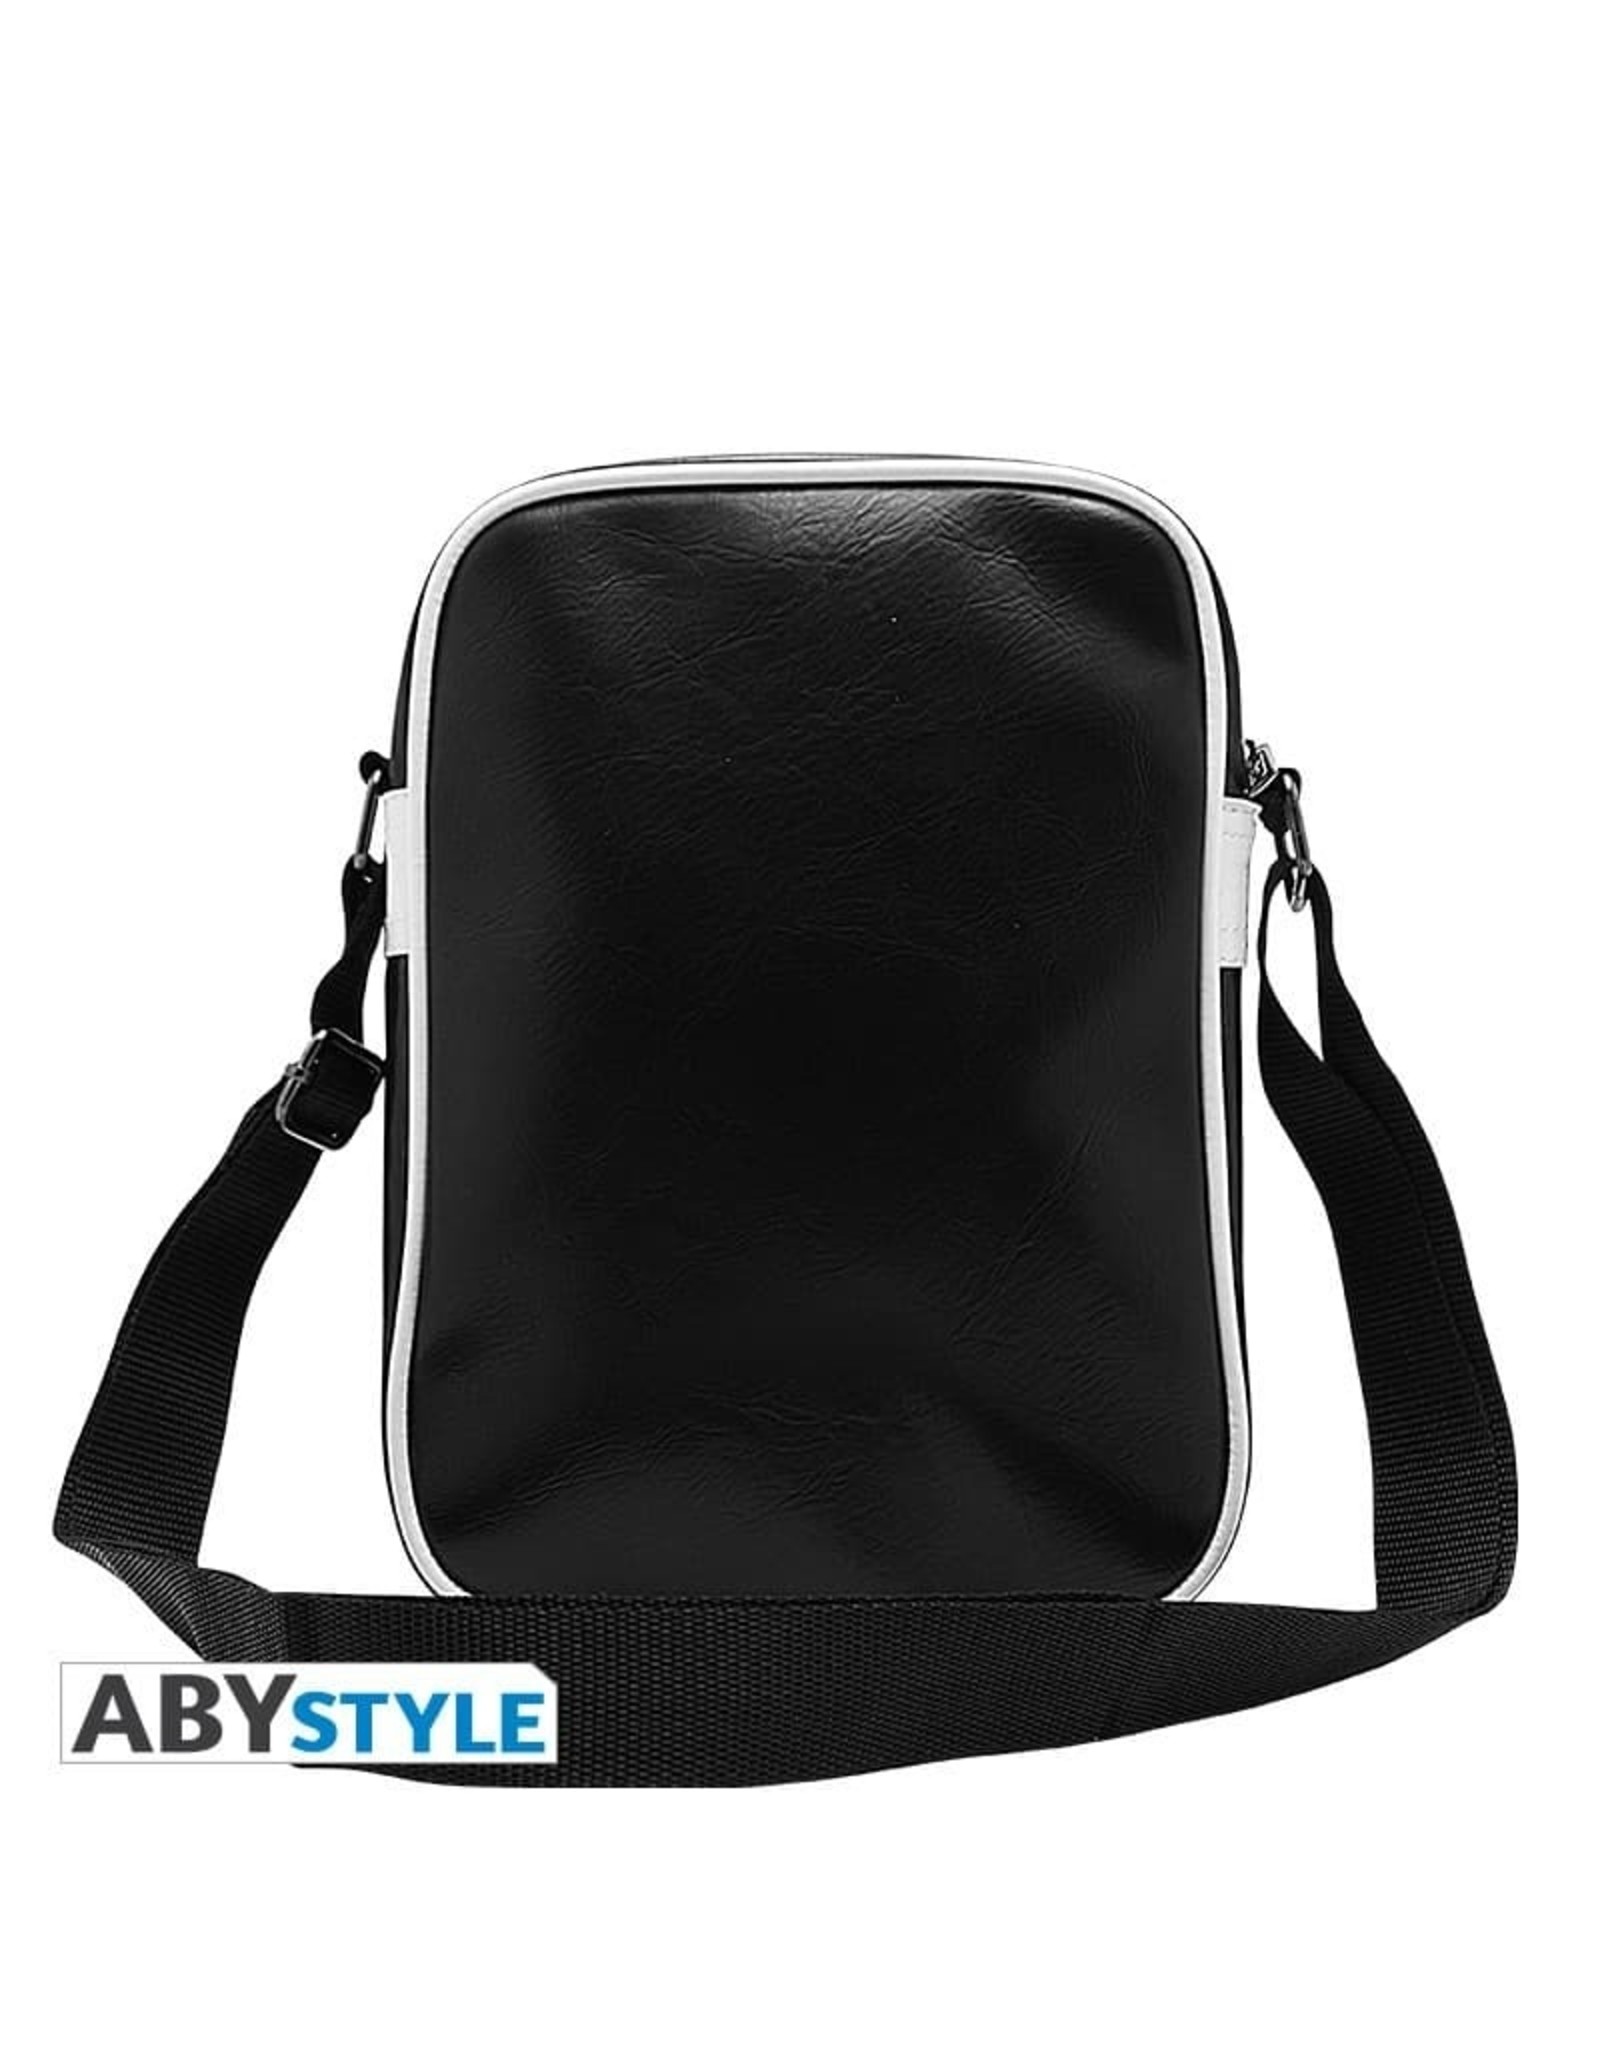 Assassination Classroom Merchandise Bags - Assassination Classroom Koro shoulder bag